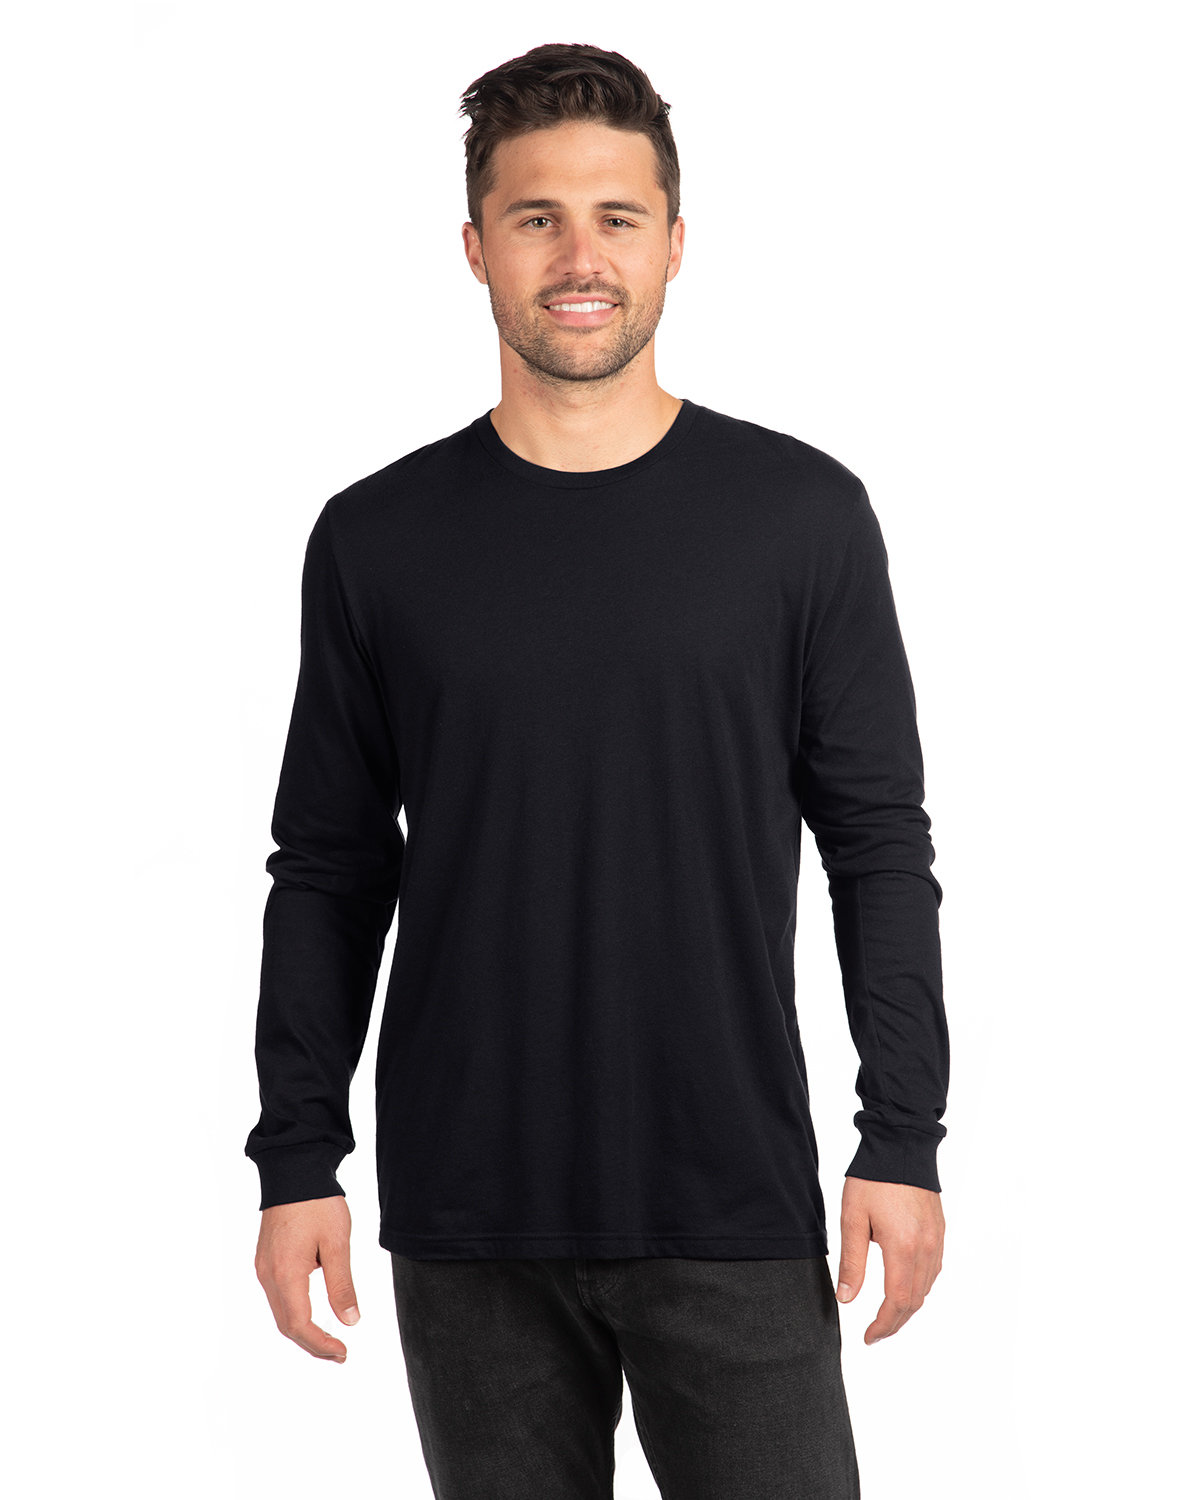 Next Level Apparel Unisex CVC Long-Sleeve T-Shirt BLACK 